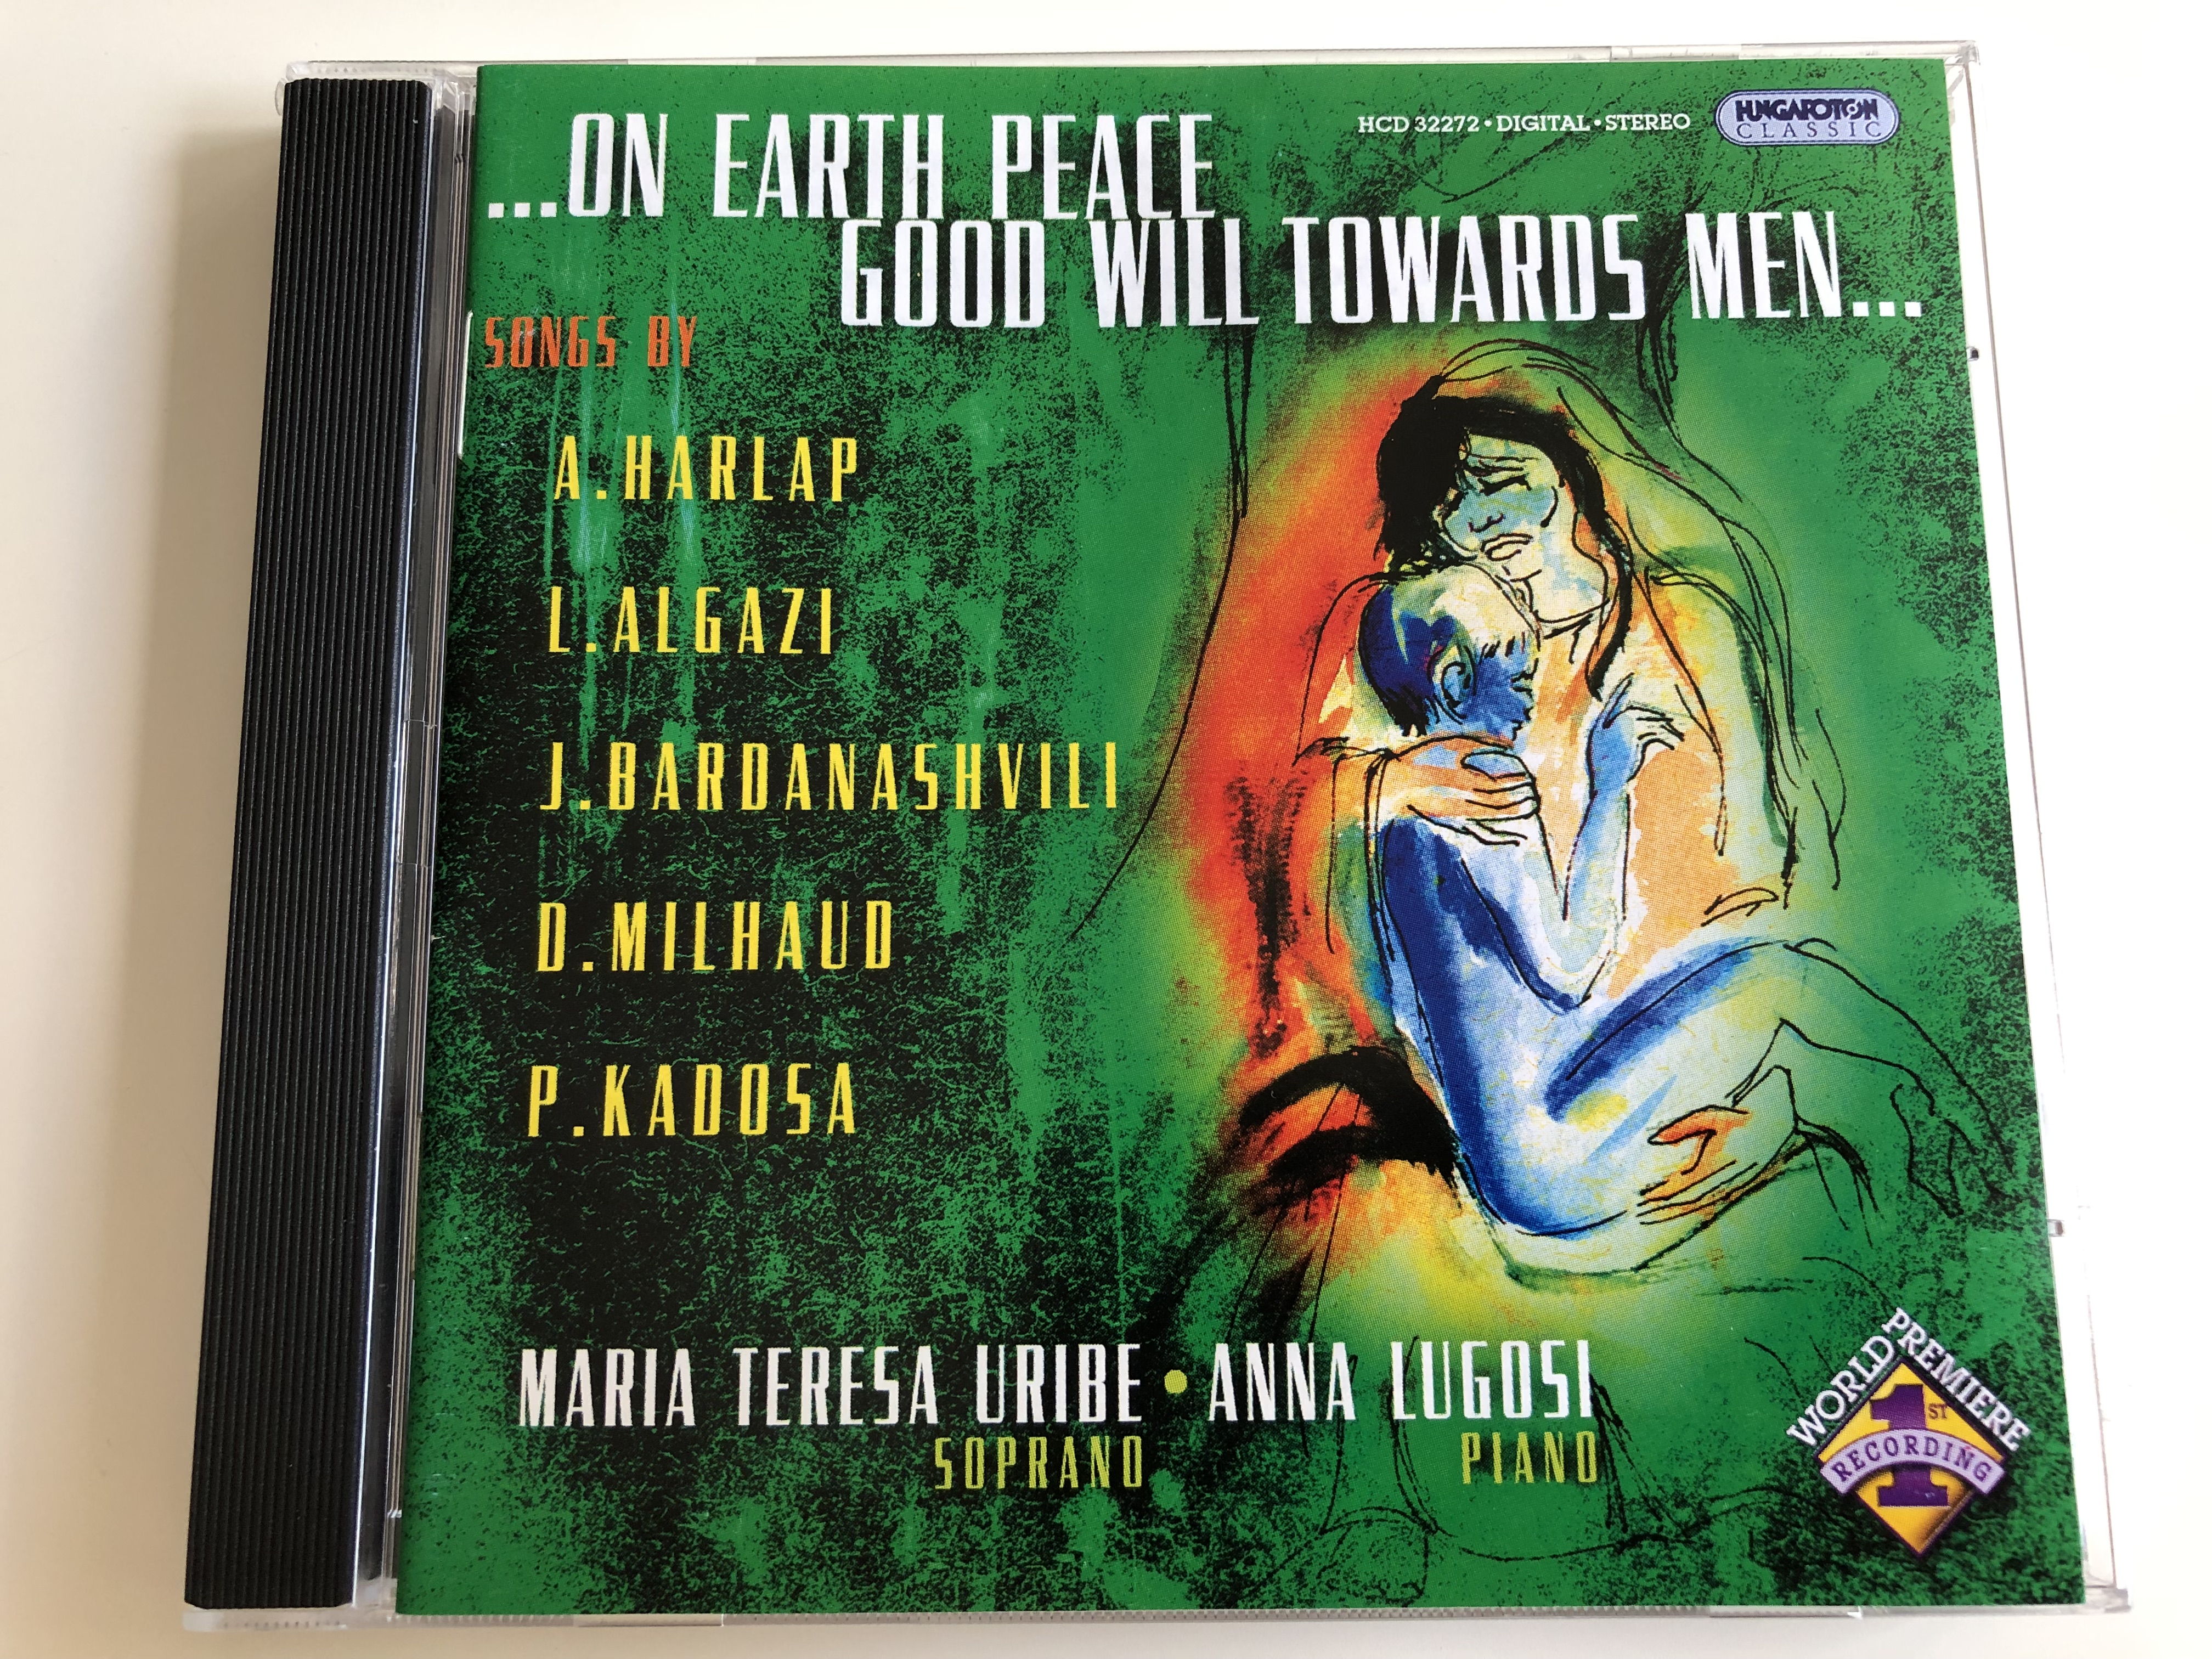 on-earth-peace-good-will-towards-men...-songs-by-a.-harlap-l.-algazi-j.-bardanashvili-d.-milhaud-p.-kadosa-maria-teresa-uribe-soprano-anna-lugosi-piano-hungaroton-classic-audio-cd-2005-hcd-32272-1-.jpg